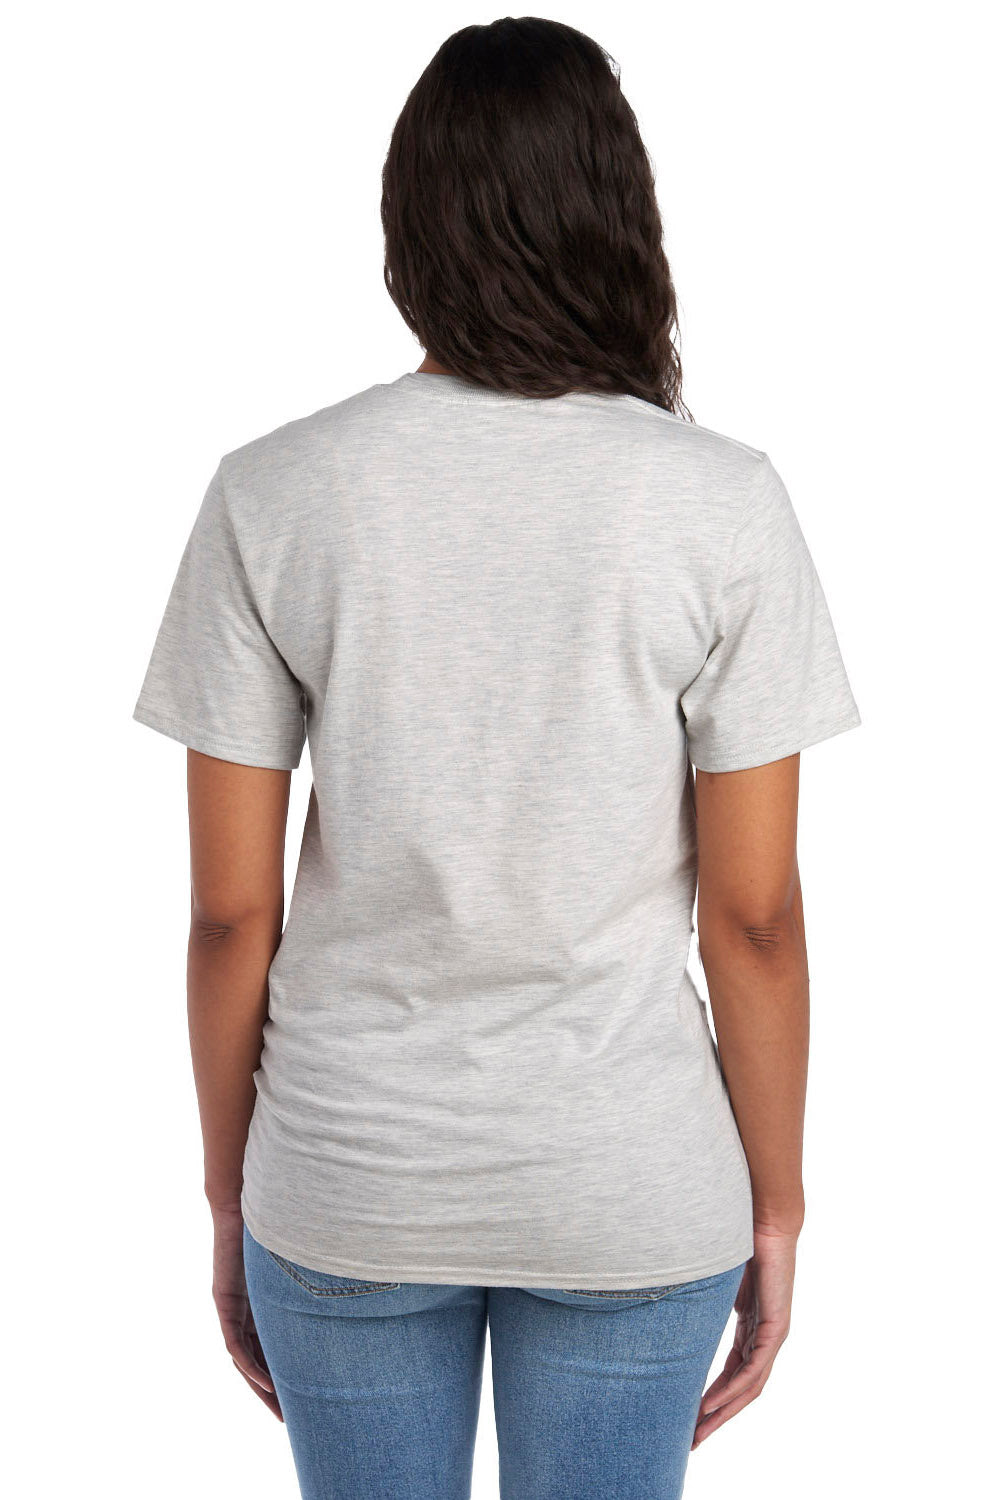 Jerzees 560MR/560M Mens Premium Blend Short Sleeve Crewneck T-Shirt Heather Oatmeal Back